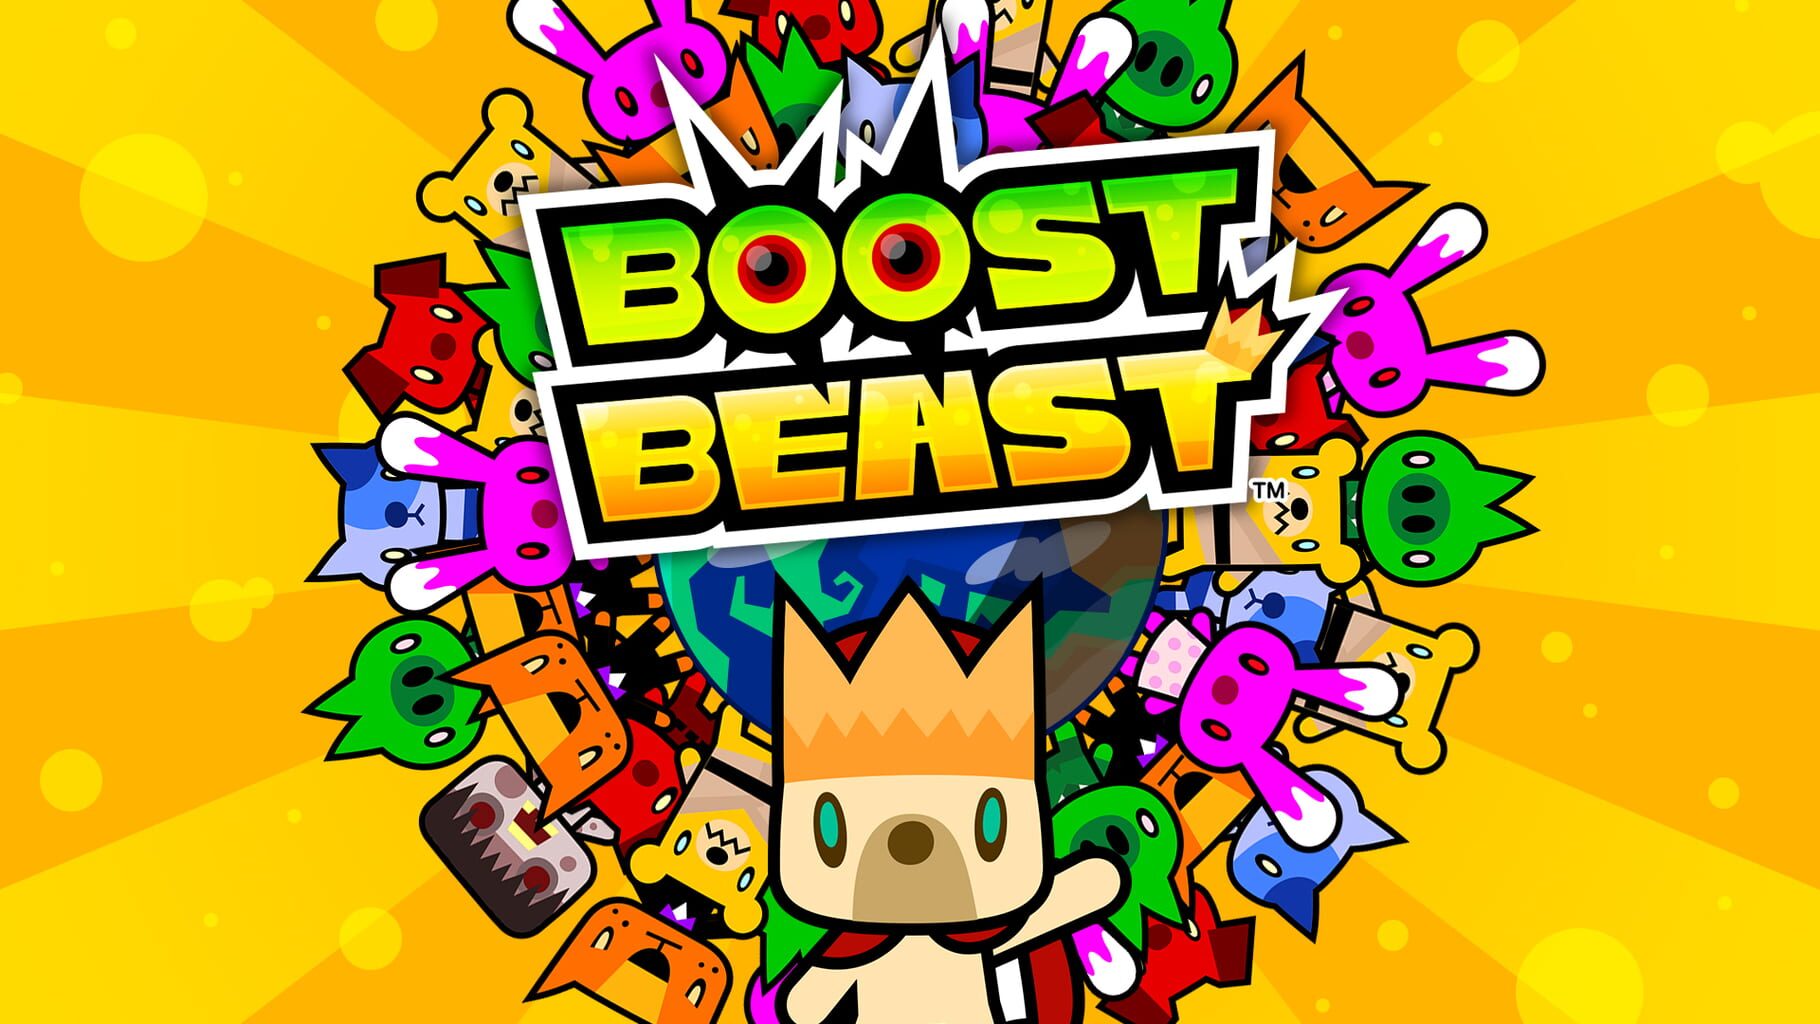 Boost Beast artwork